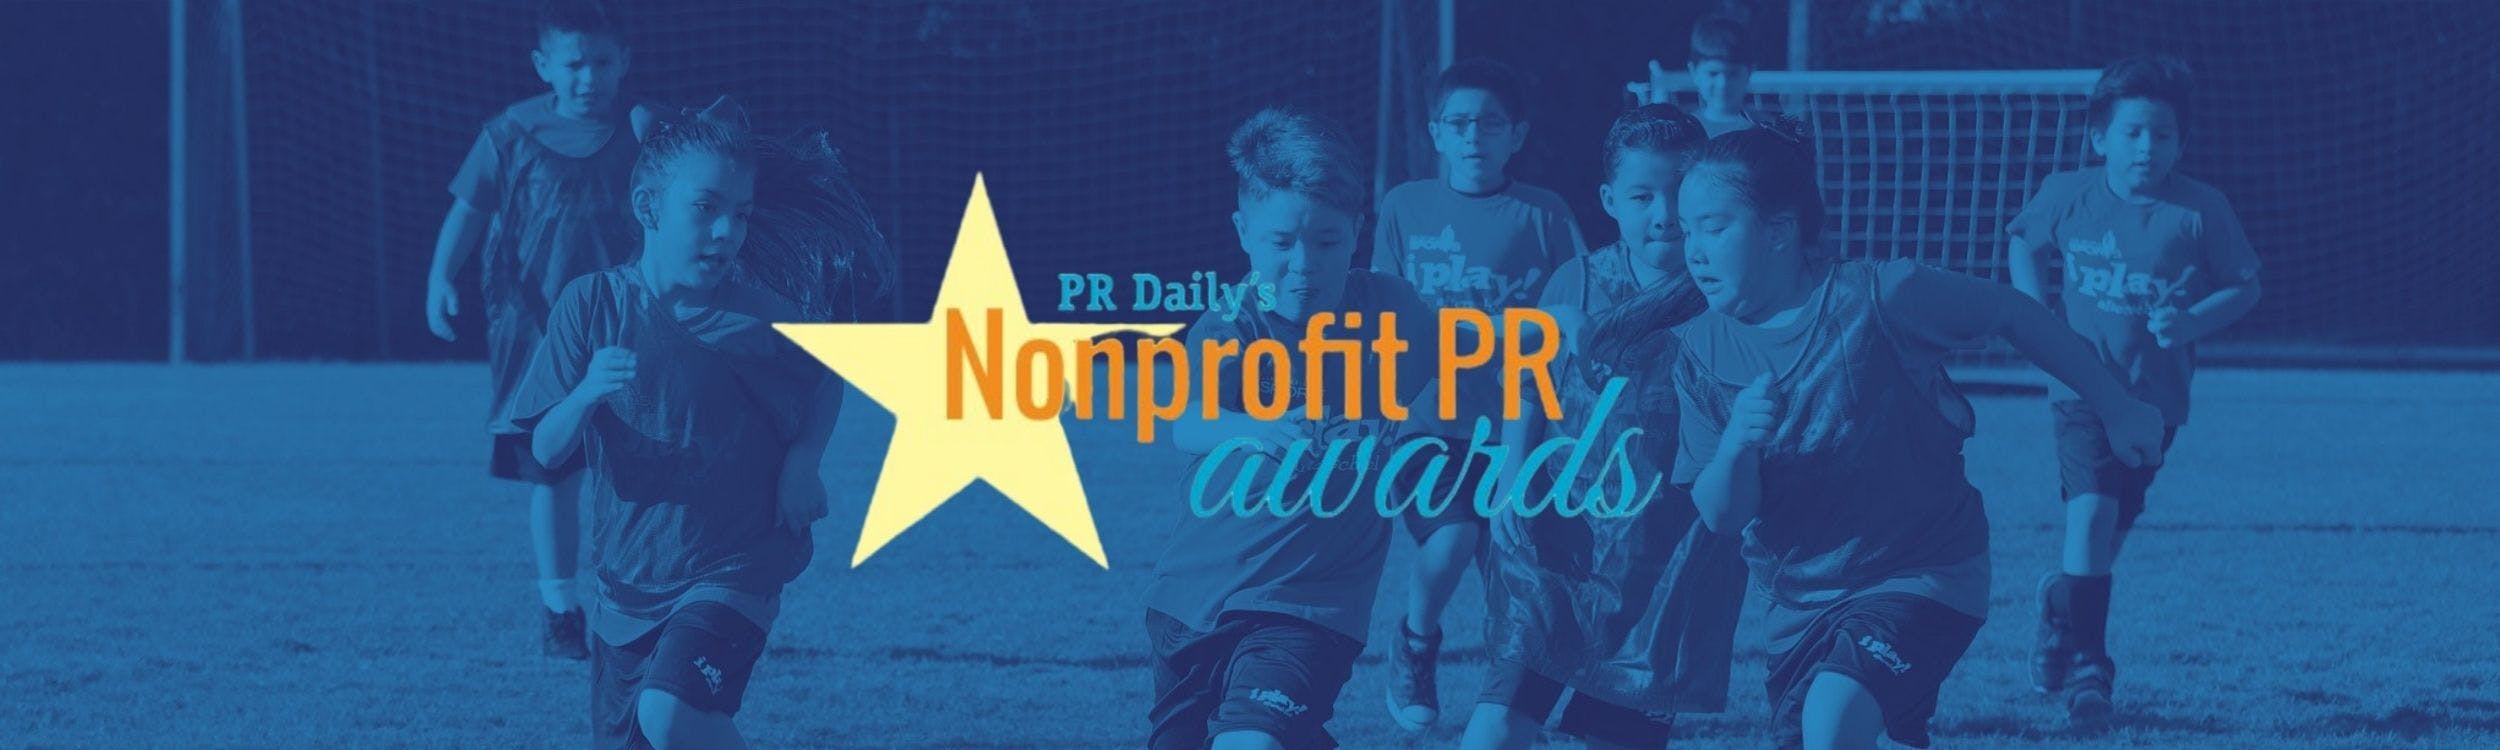 PR Daily Nonprofit PR awards banner